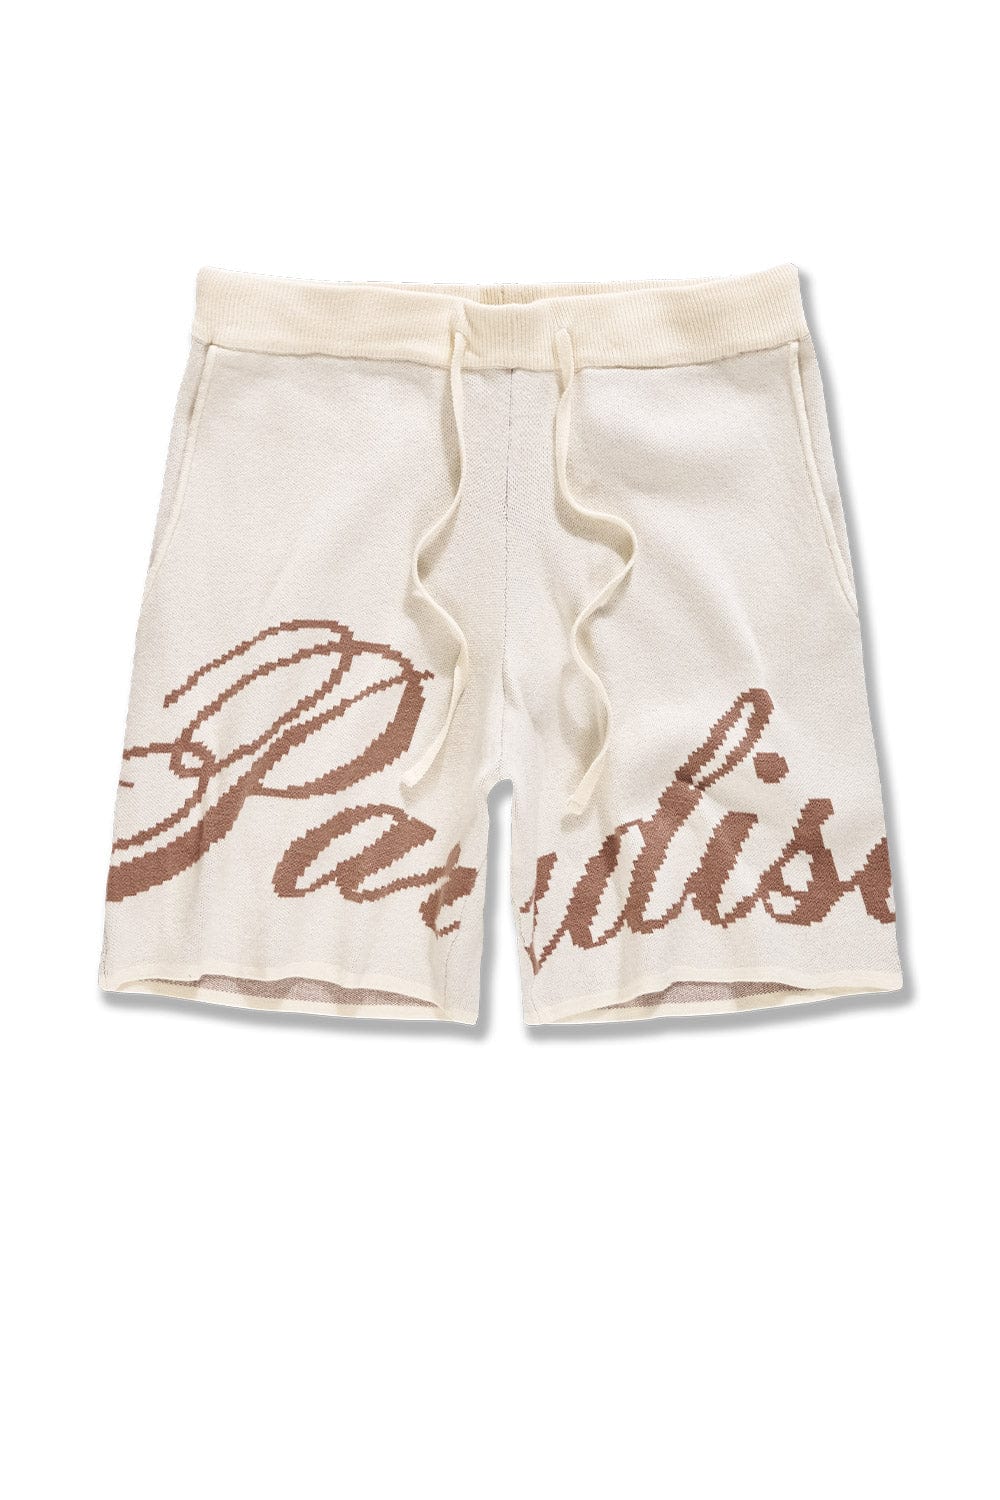 Jordan Craig Retro - Paradise Knit Shorts (Cream)